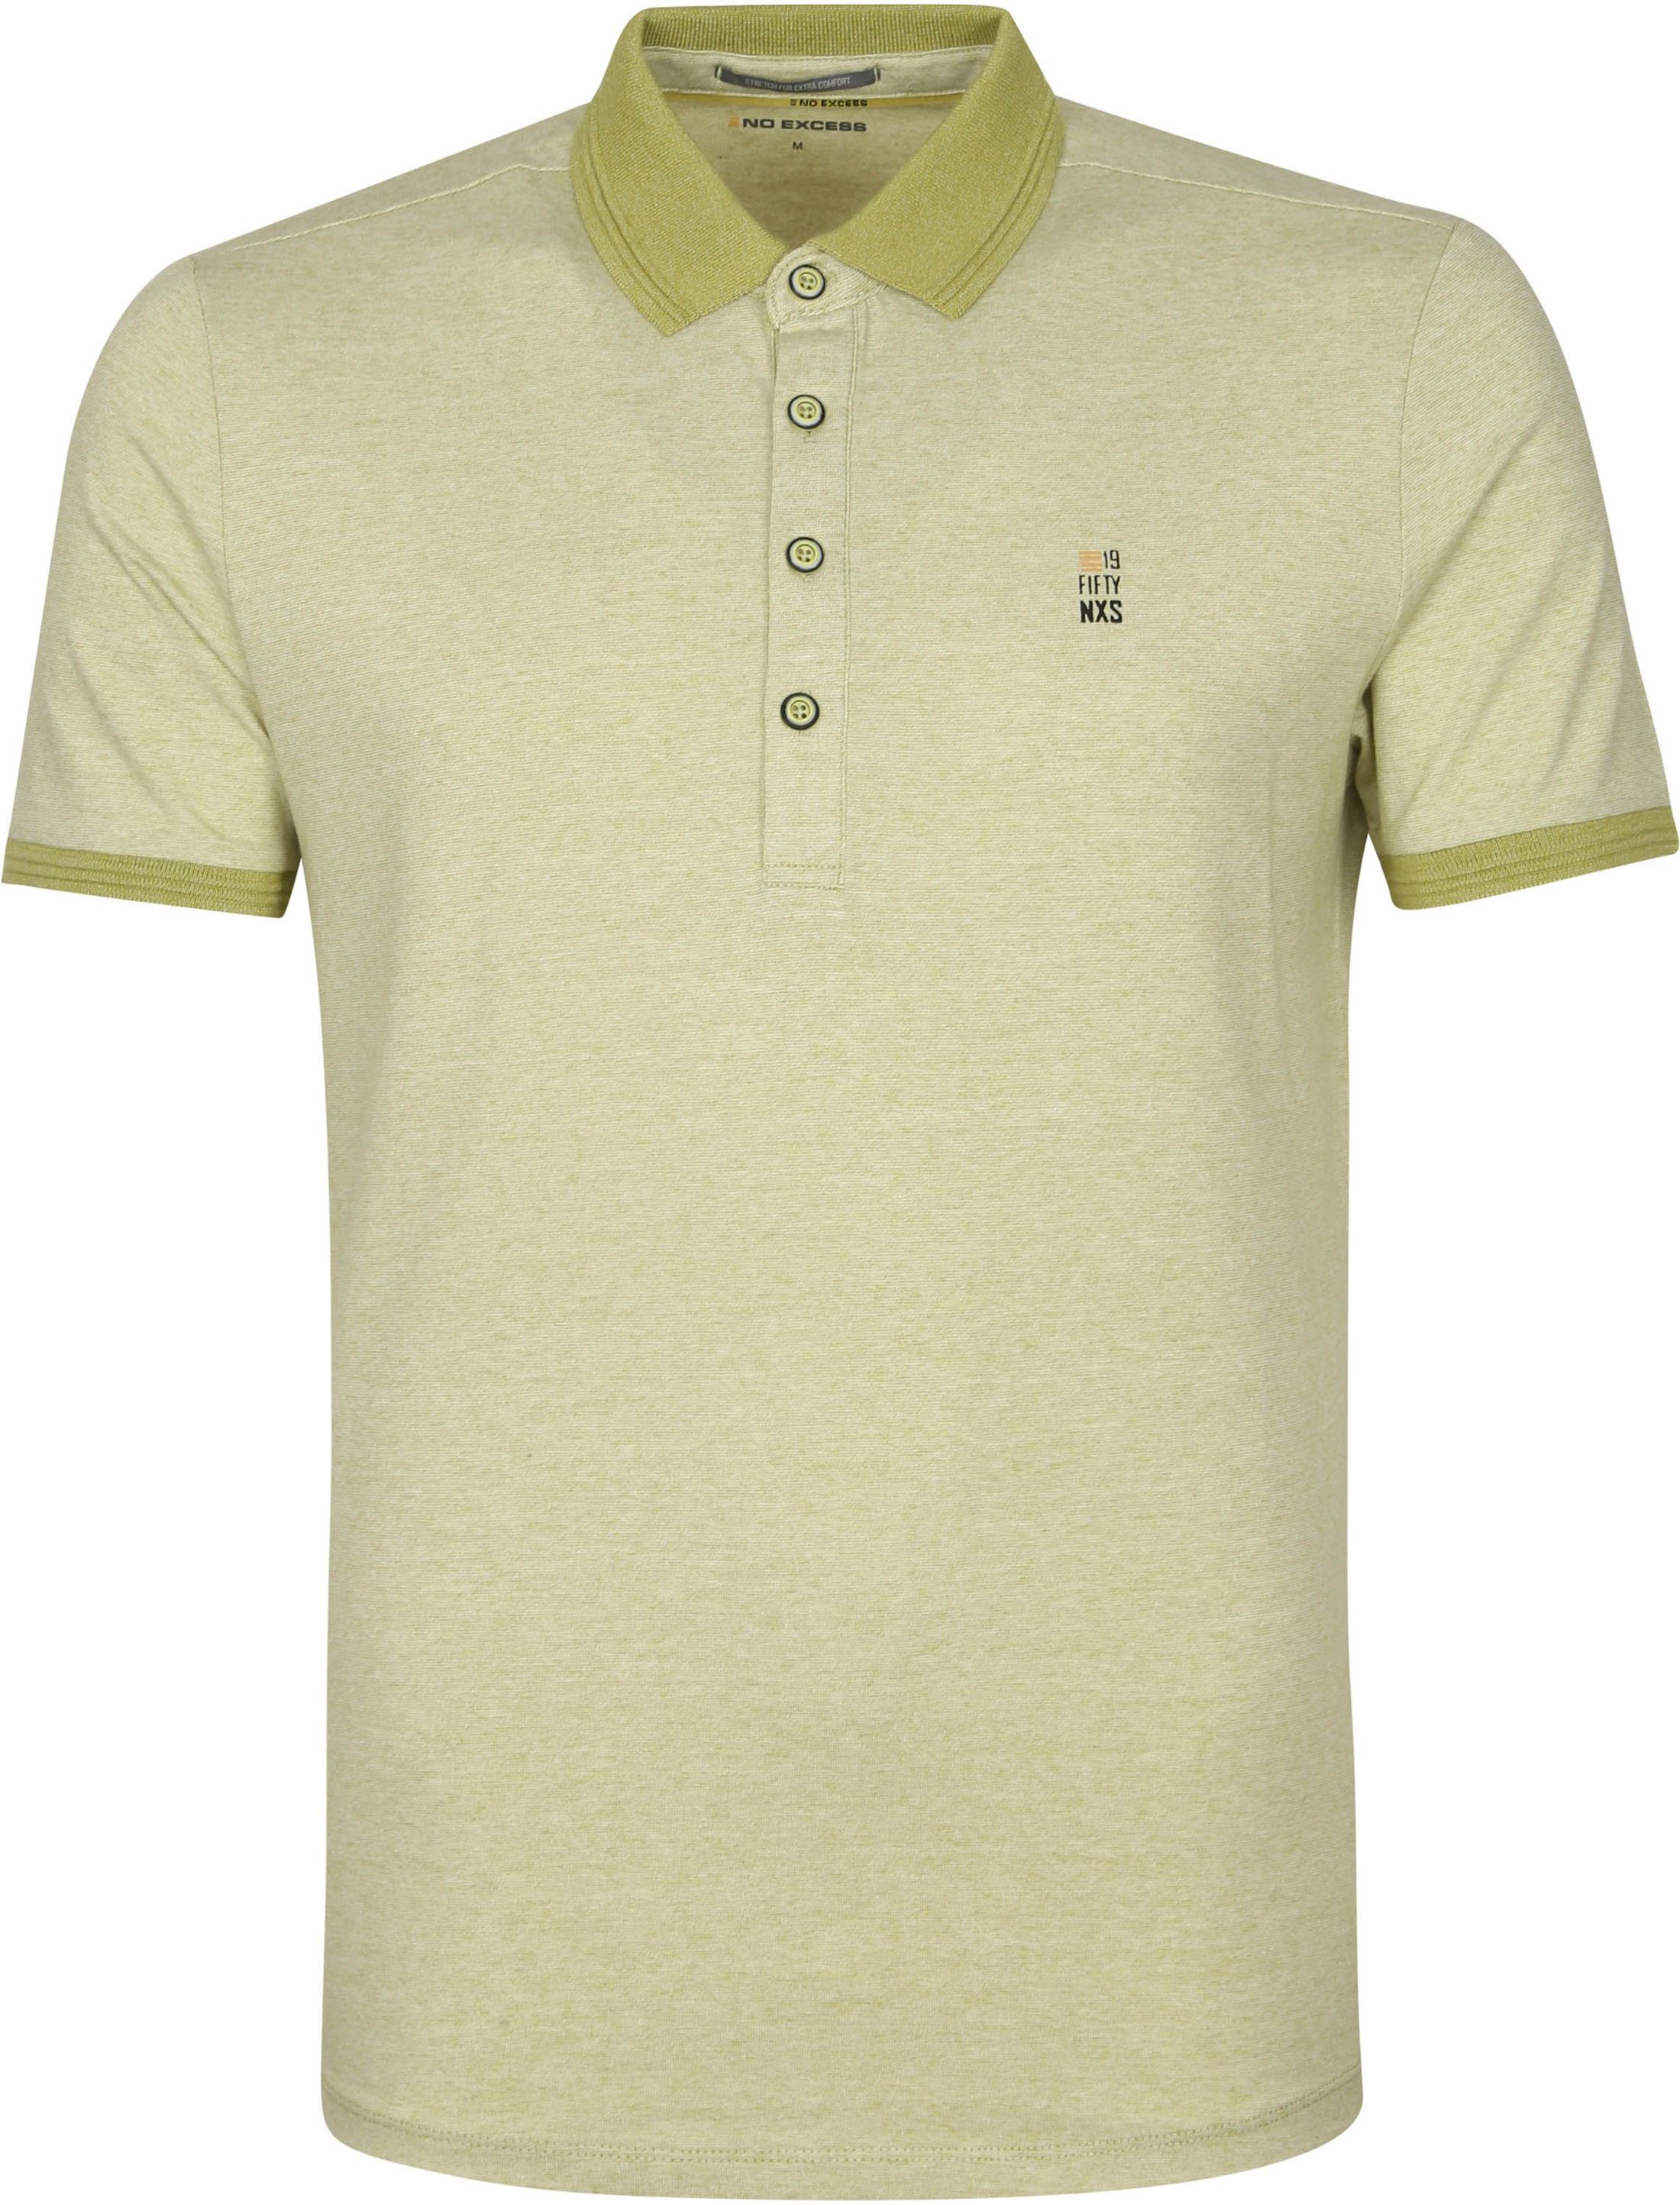 No-Excess Jacquard Polo Shirt Green size M